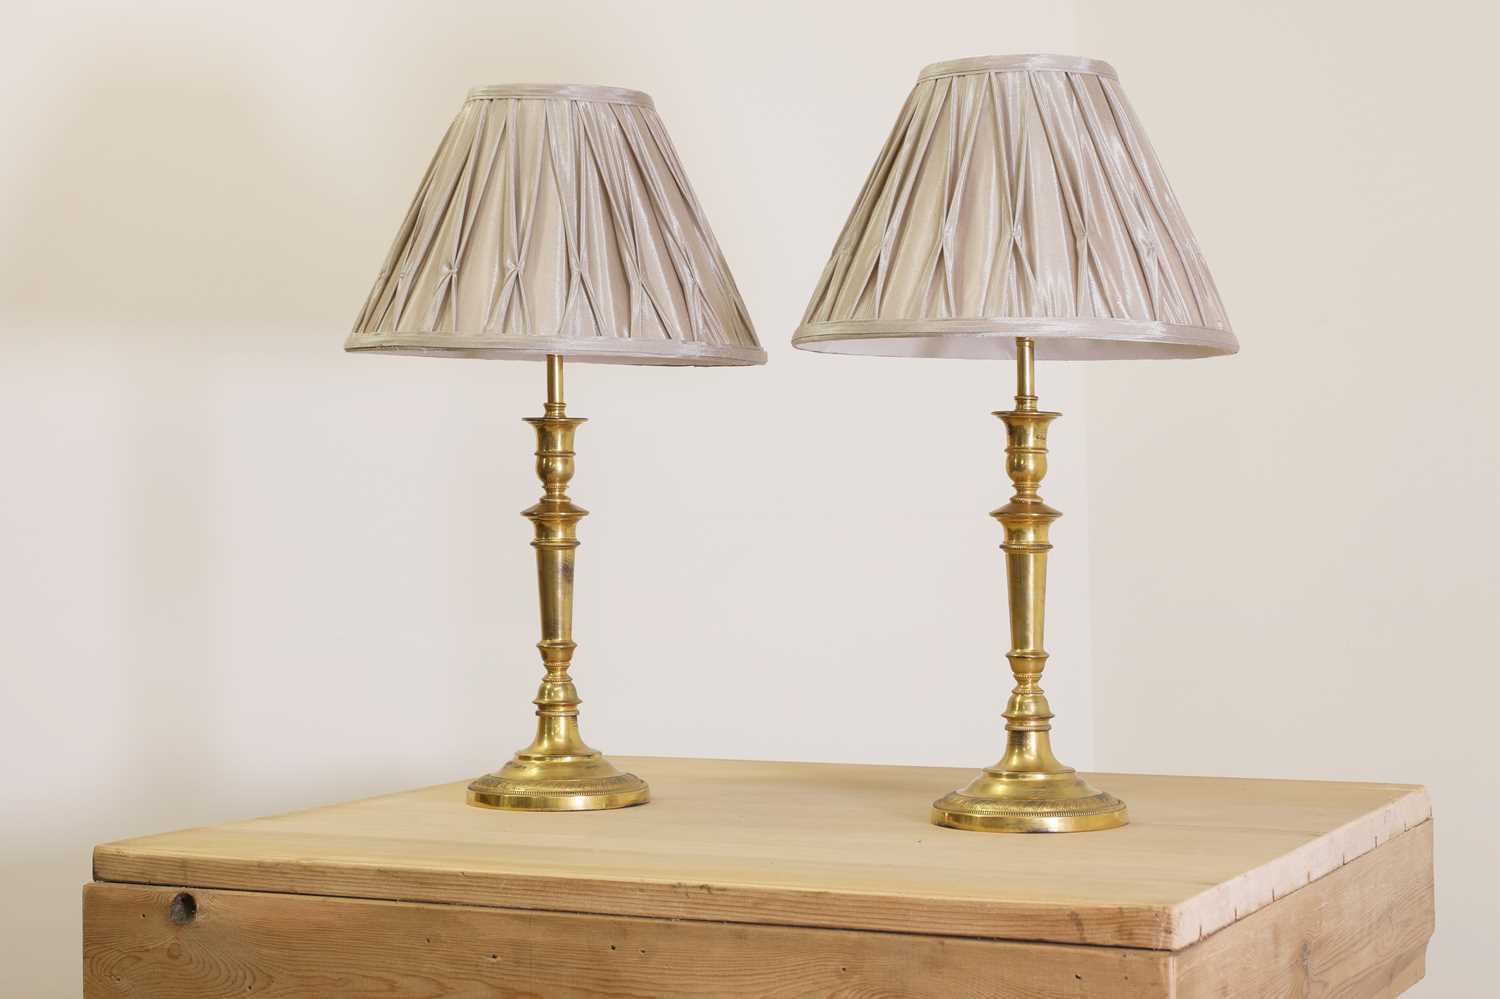 Lot 467 - A pair of gilt-bronze candlestick lamps